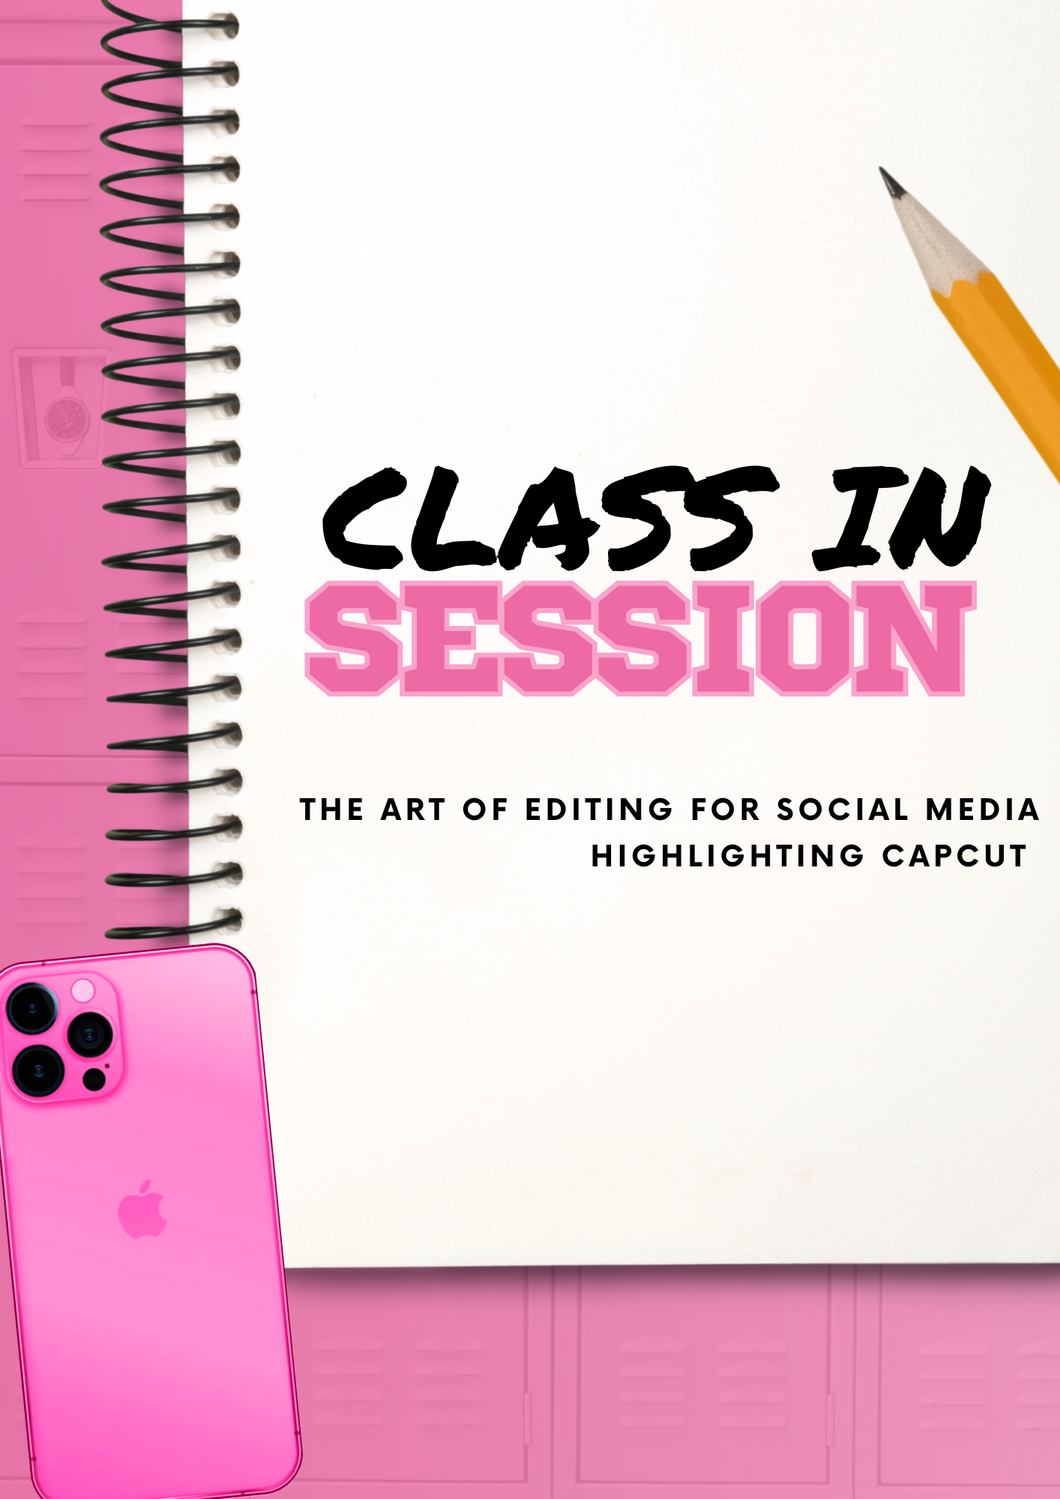 THE ART OF EDITING FOR SOCIAL MEDIA: HIGHLIGHTING CAPCUT